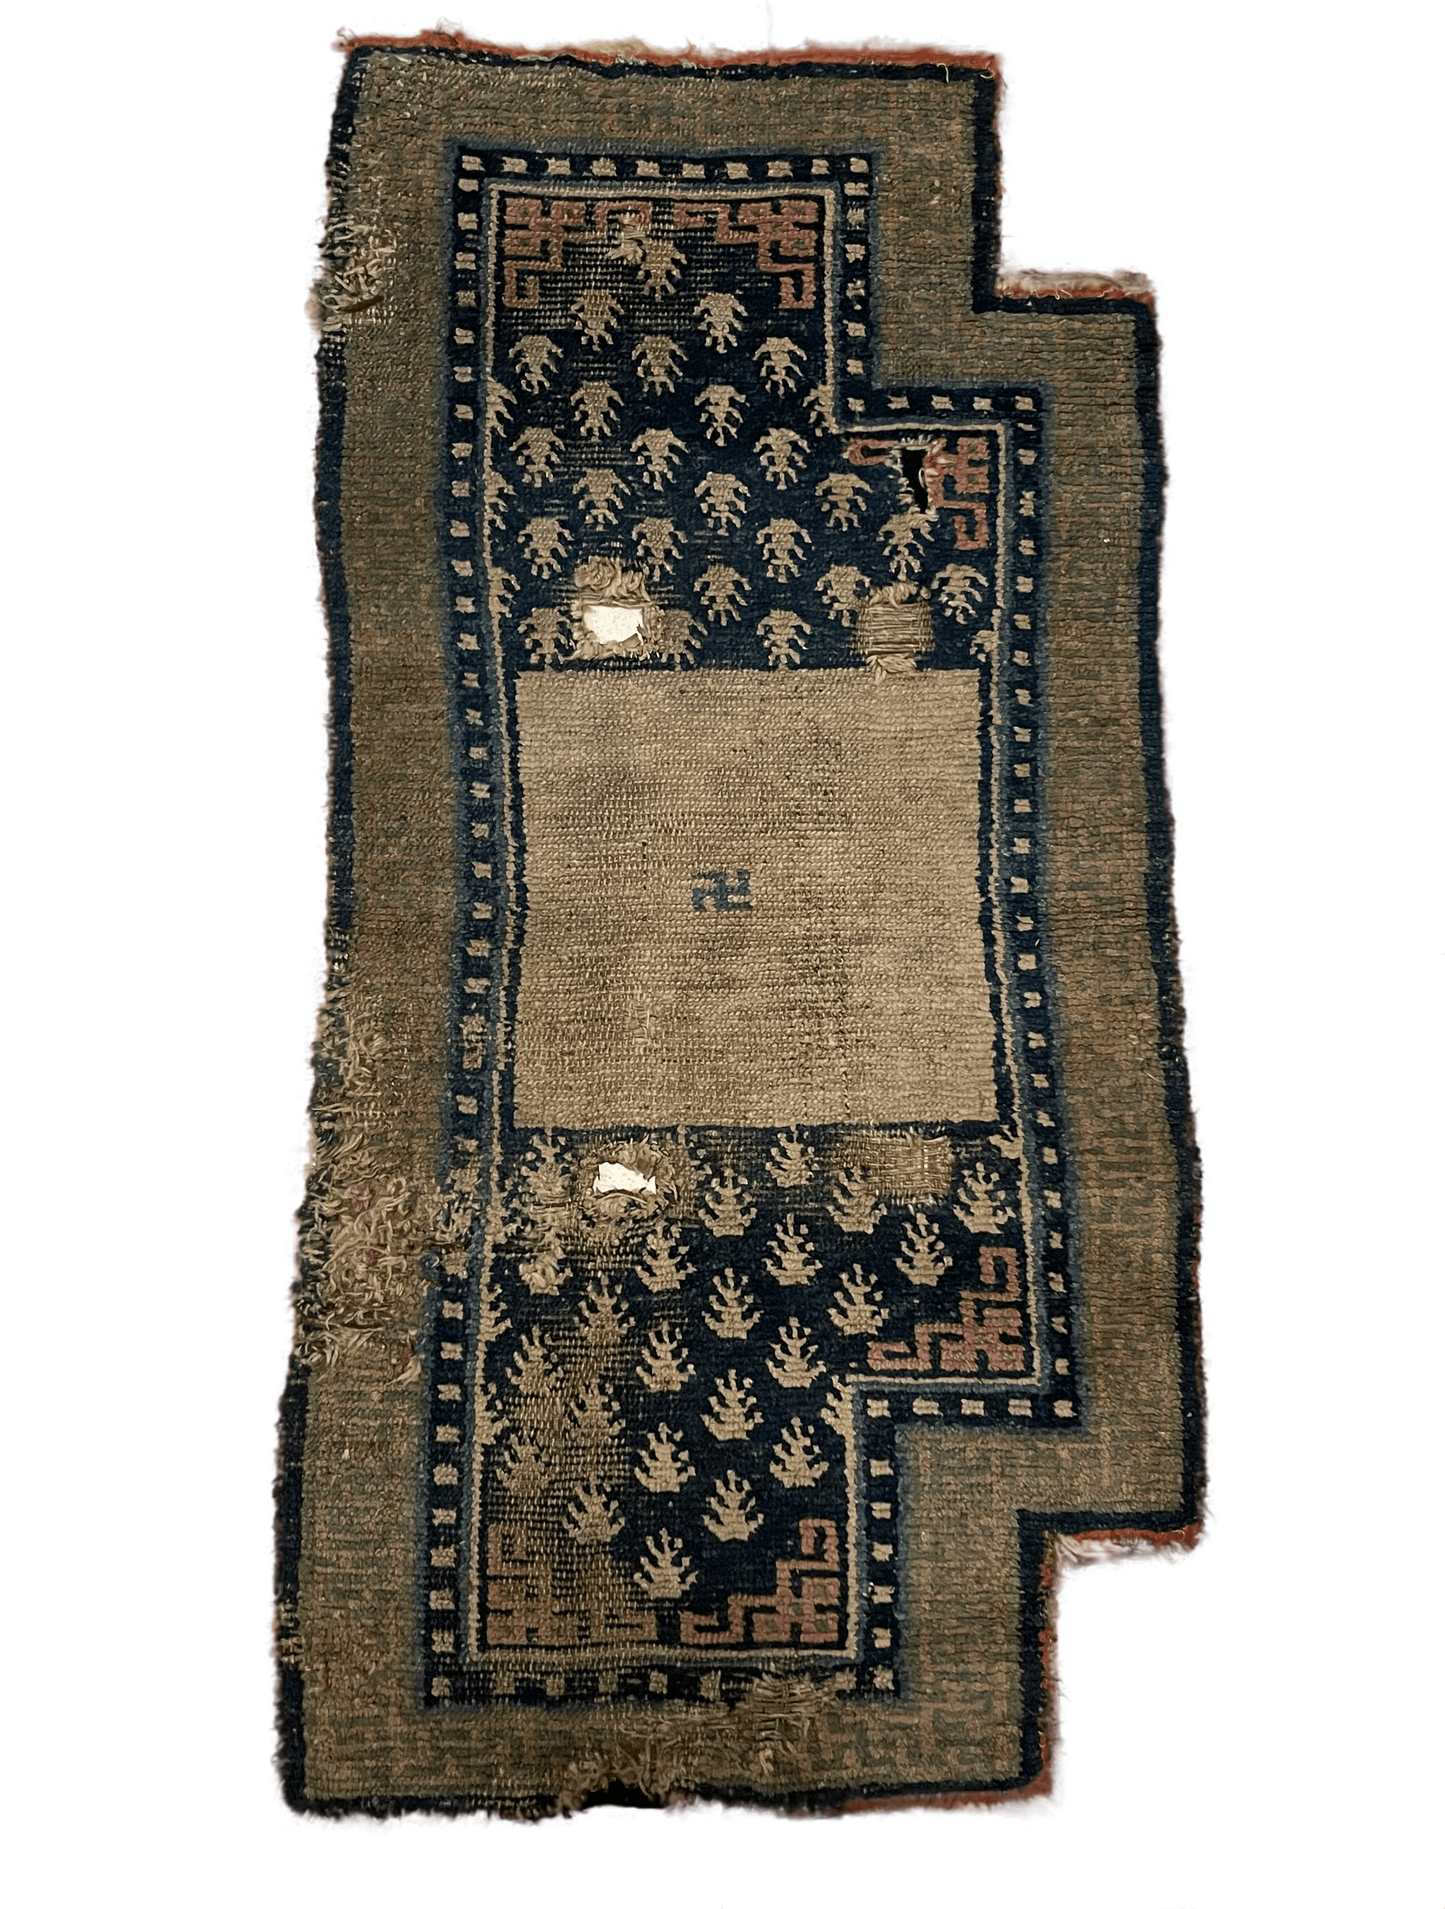 An antique mid 19th C saddle blanket/rug